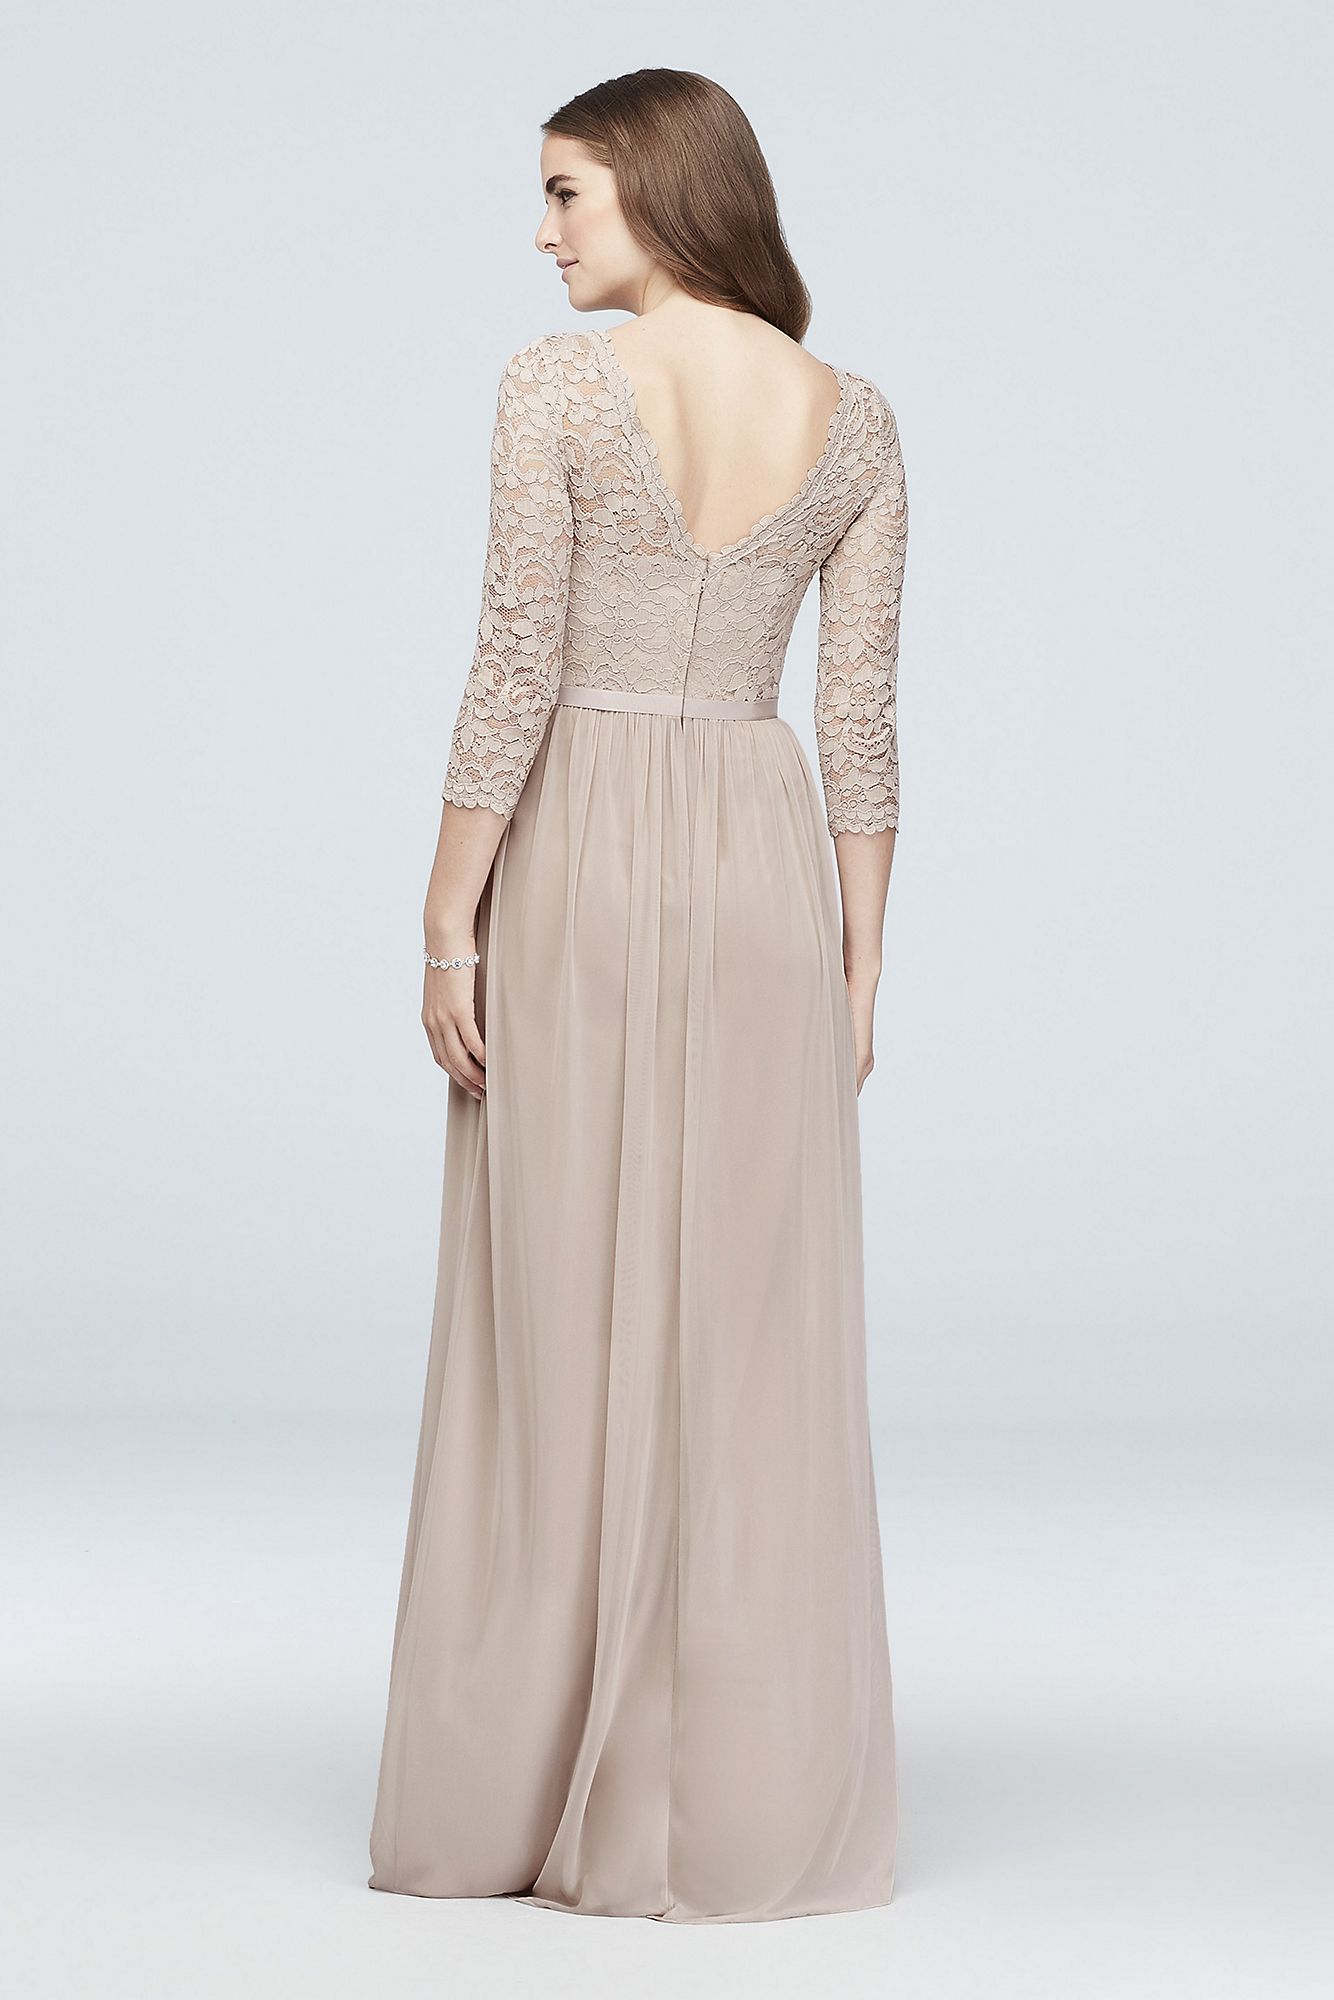 3/4-Sleeve Illusion Lace and Mesh Bridesmaid Dress F19908 [F19908 ...